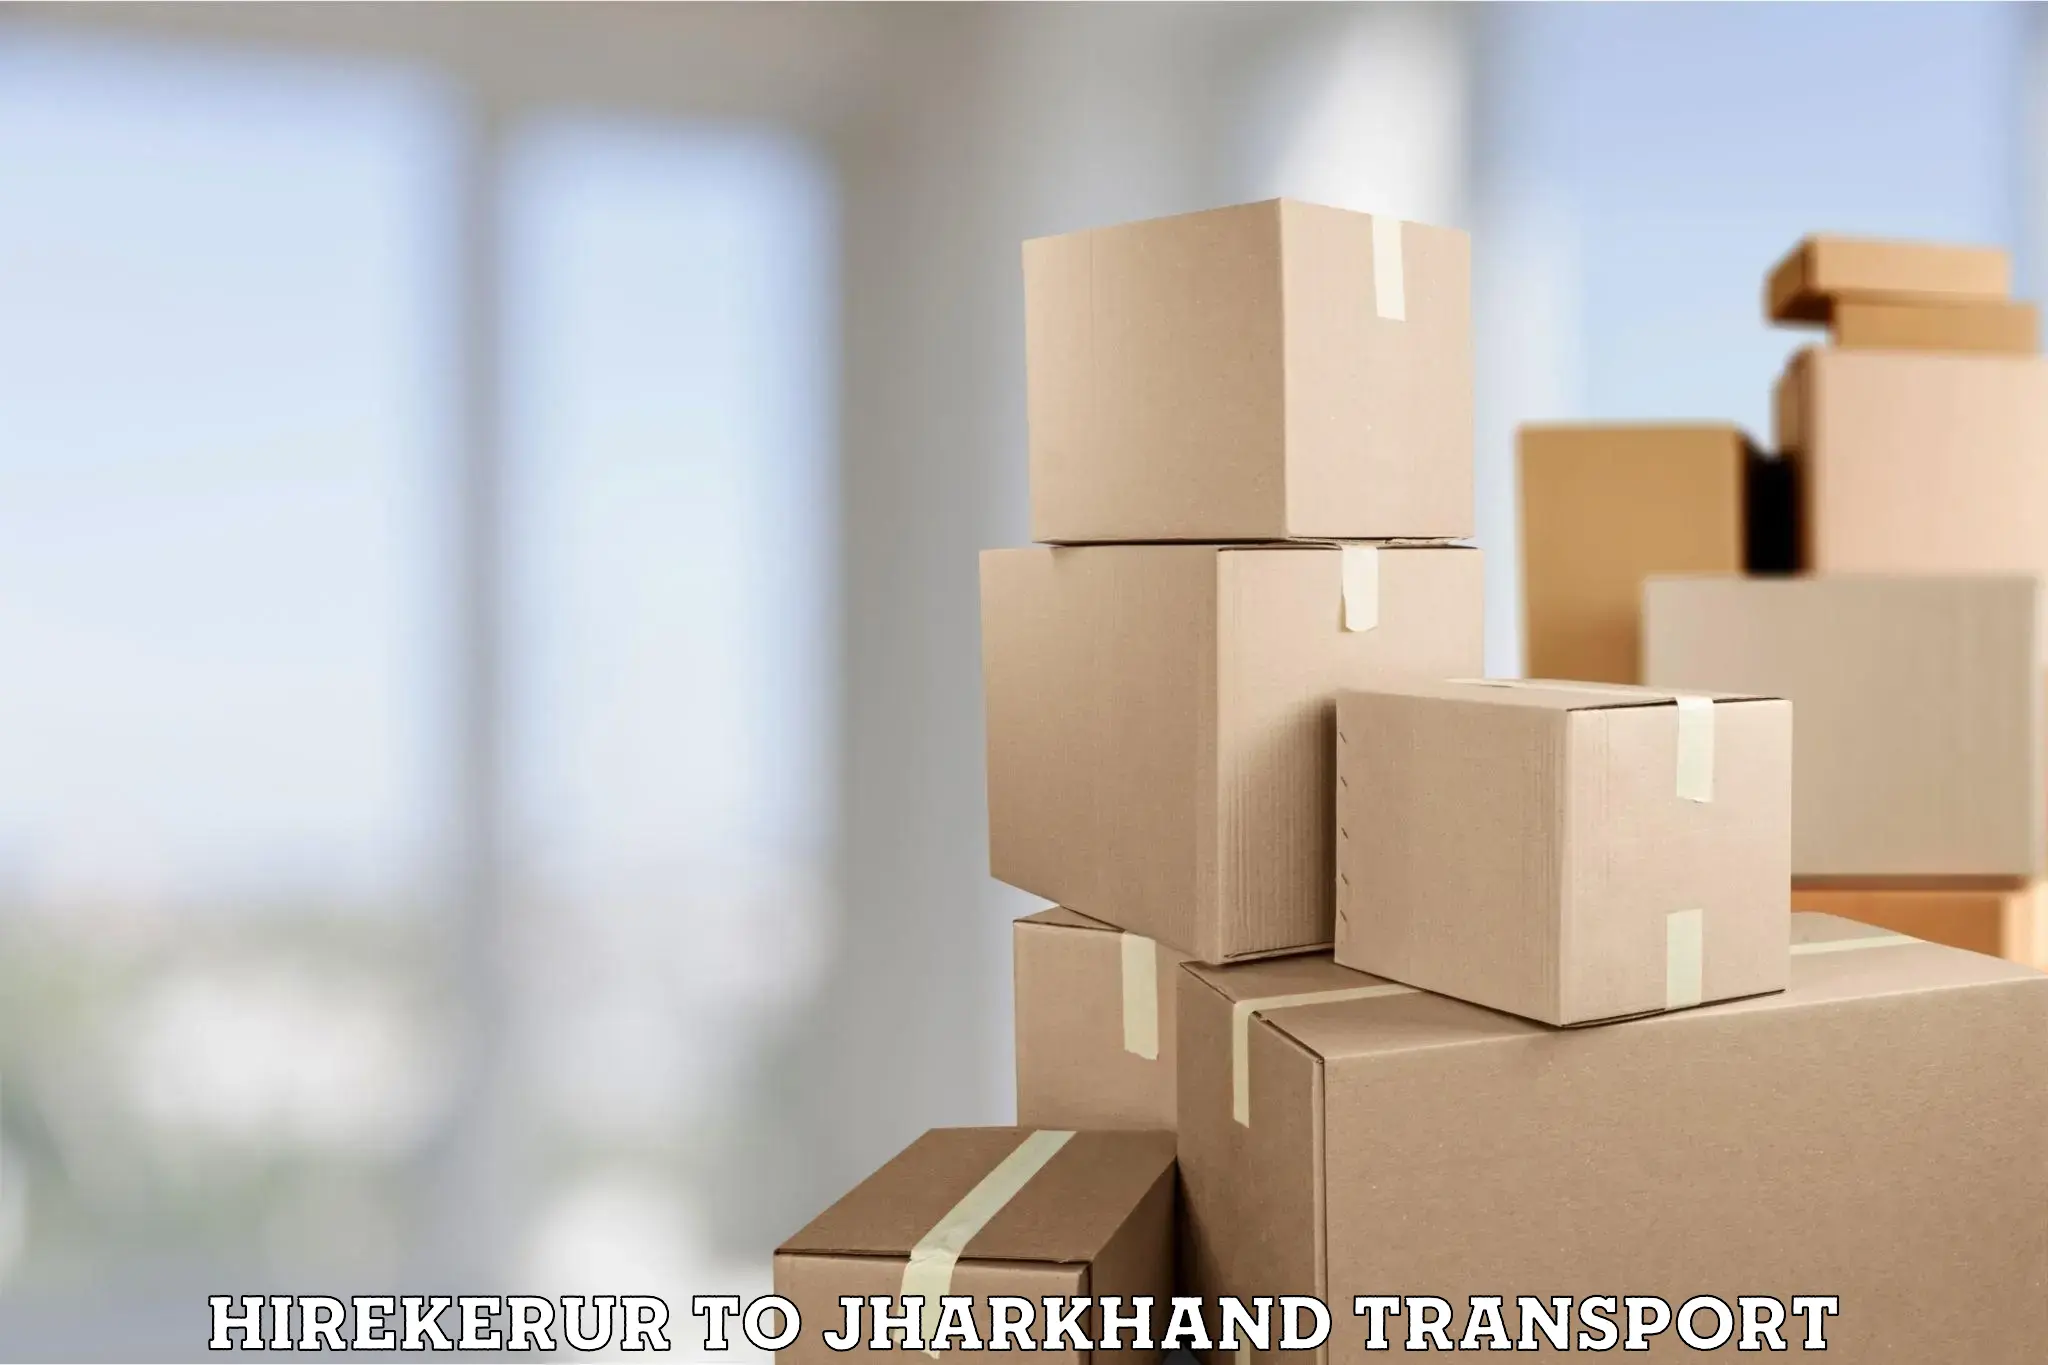 Transport shared services Hirekerur to Bokaro Steel City